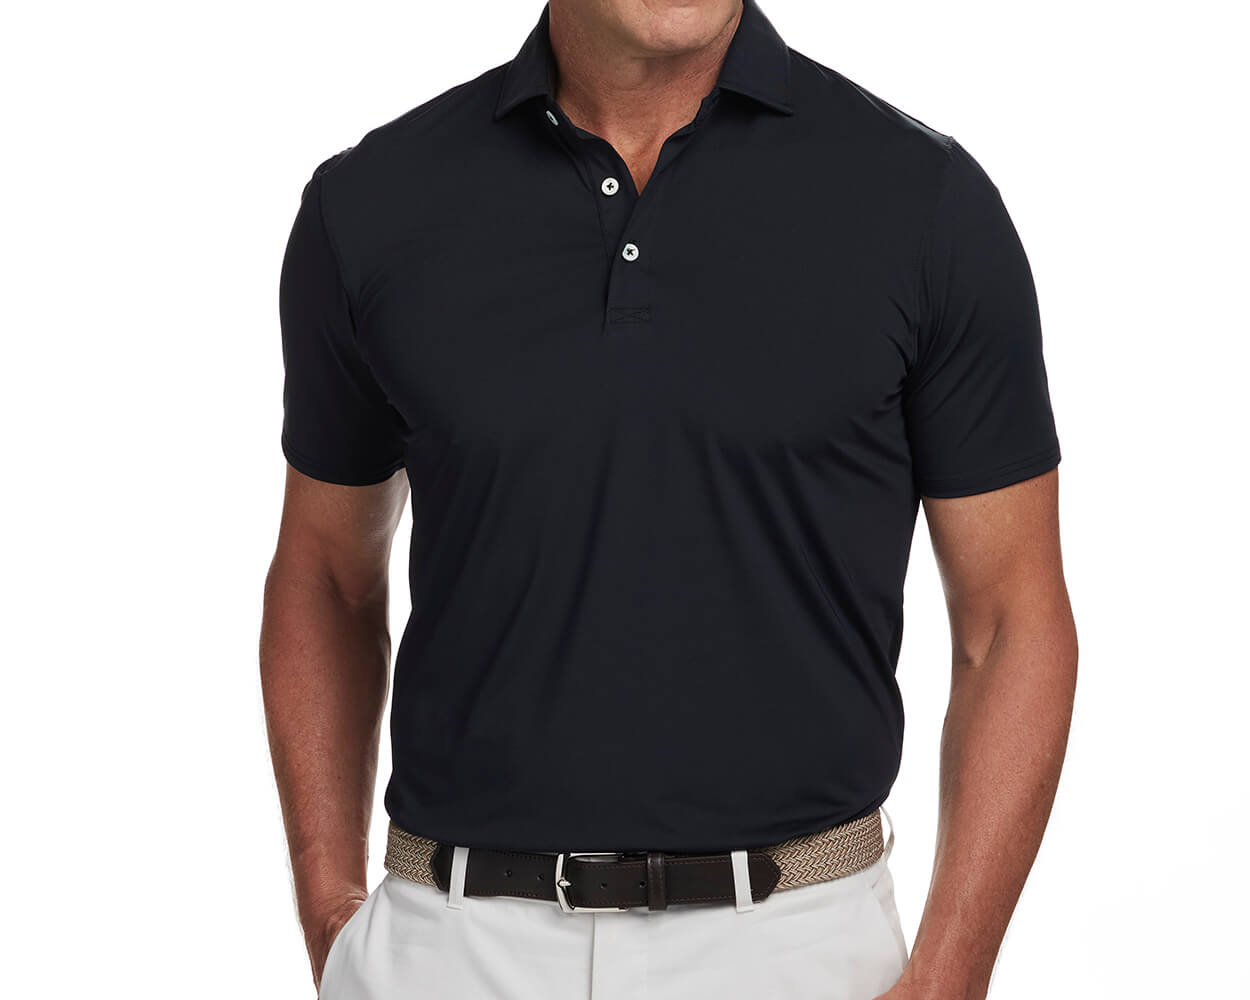 Front shot of Holderness and Bourne solid black polo shirt modeled on man's torso.